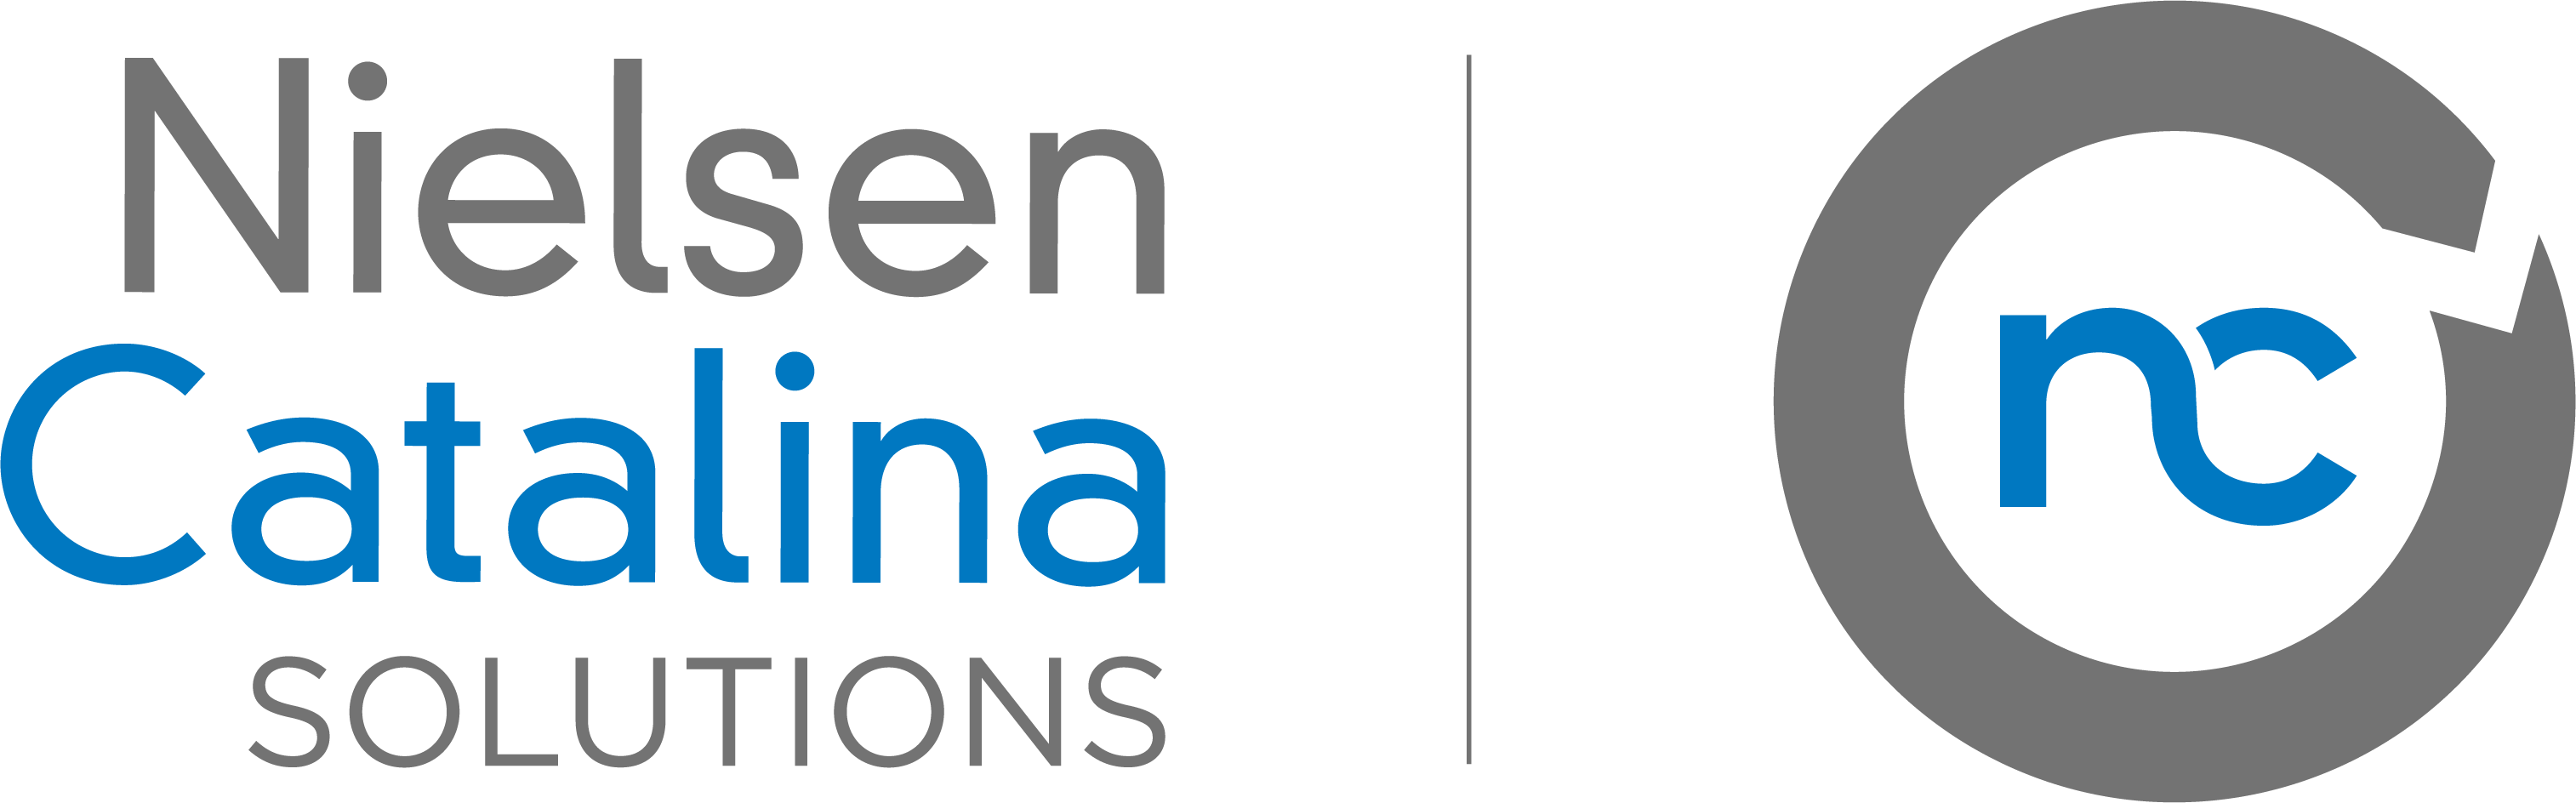 Nielsen Catalina Logo - Nielsen Catalina Solutions | Pinterest Business